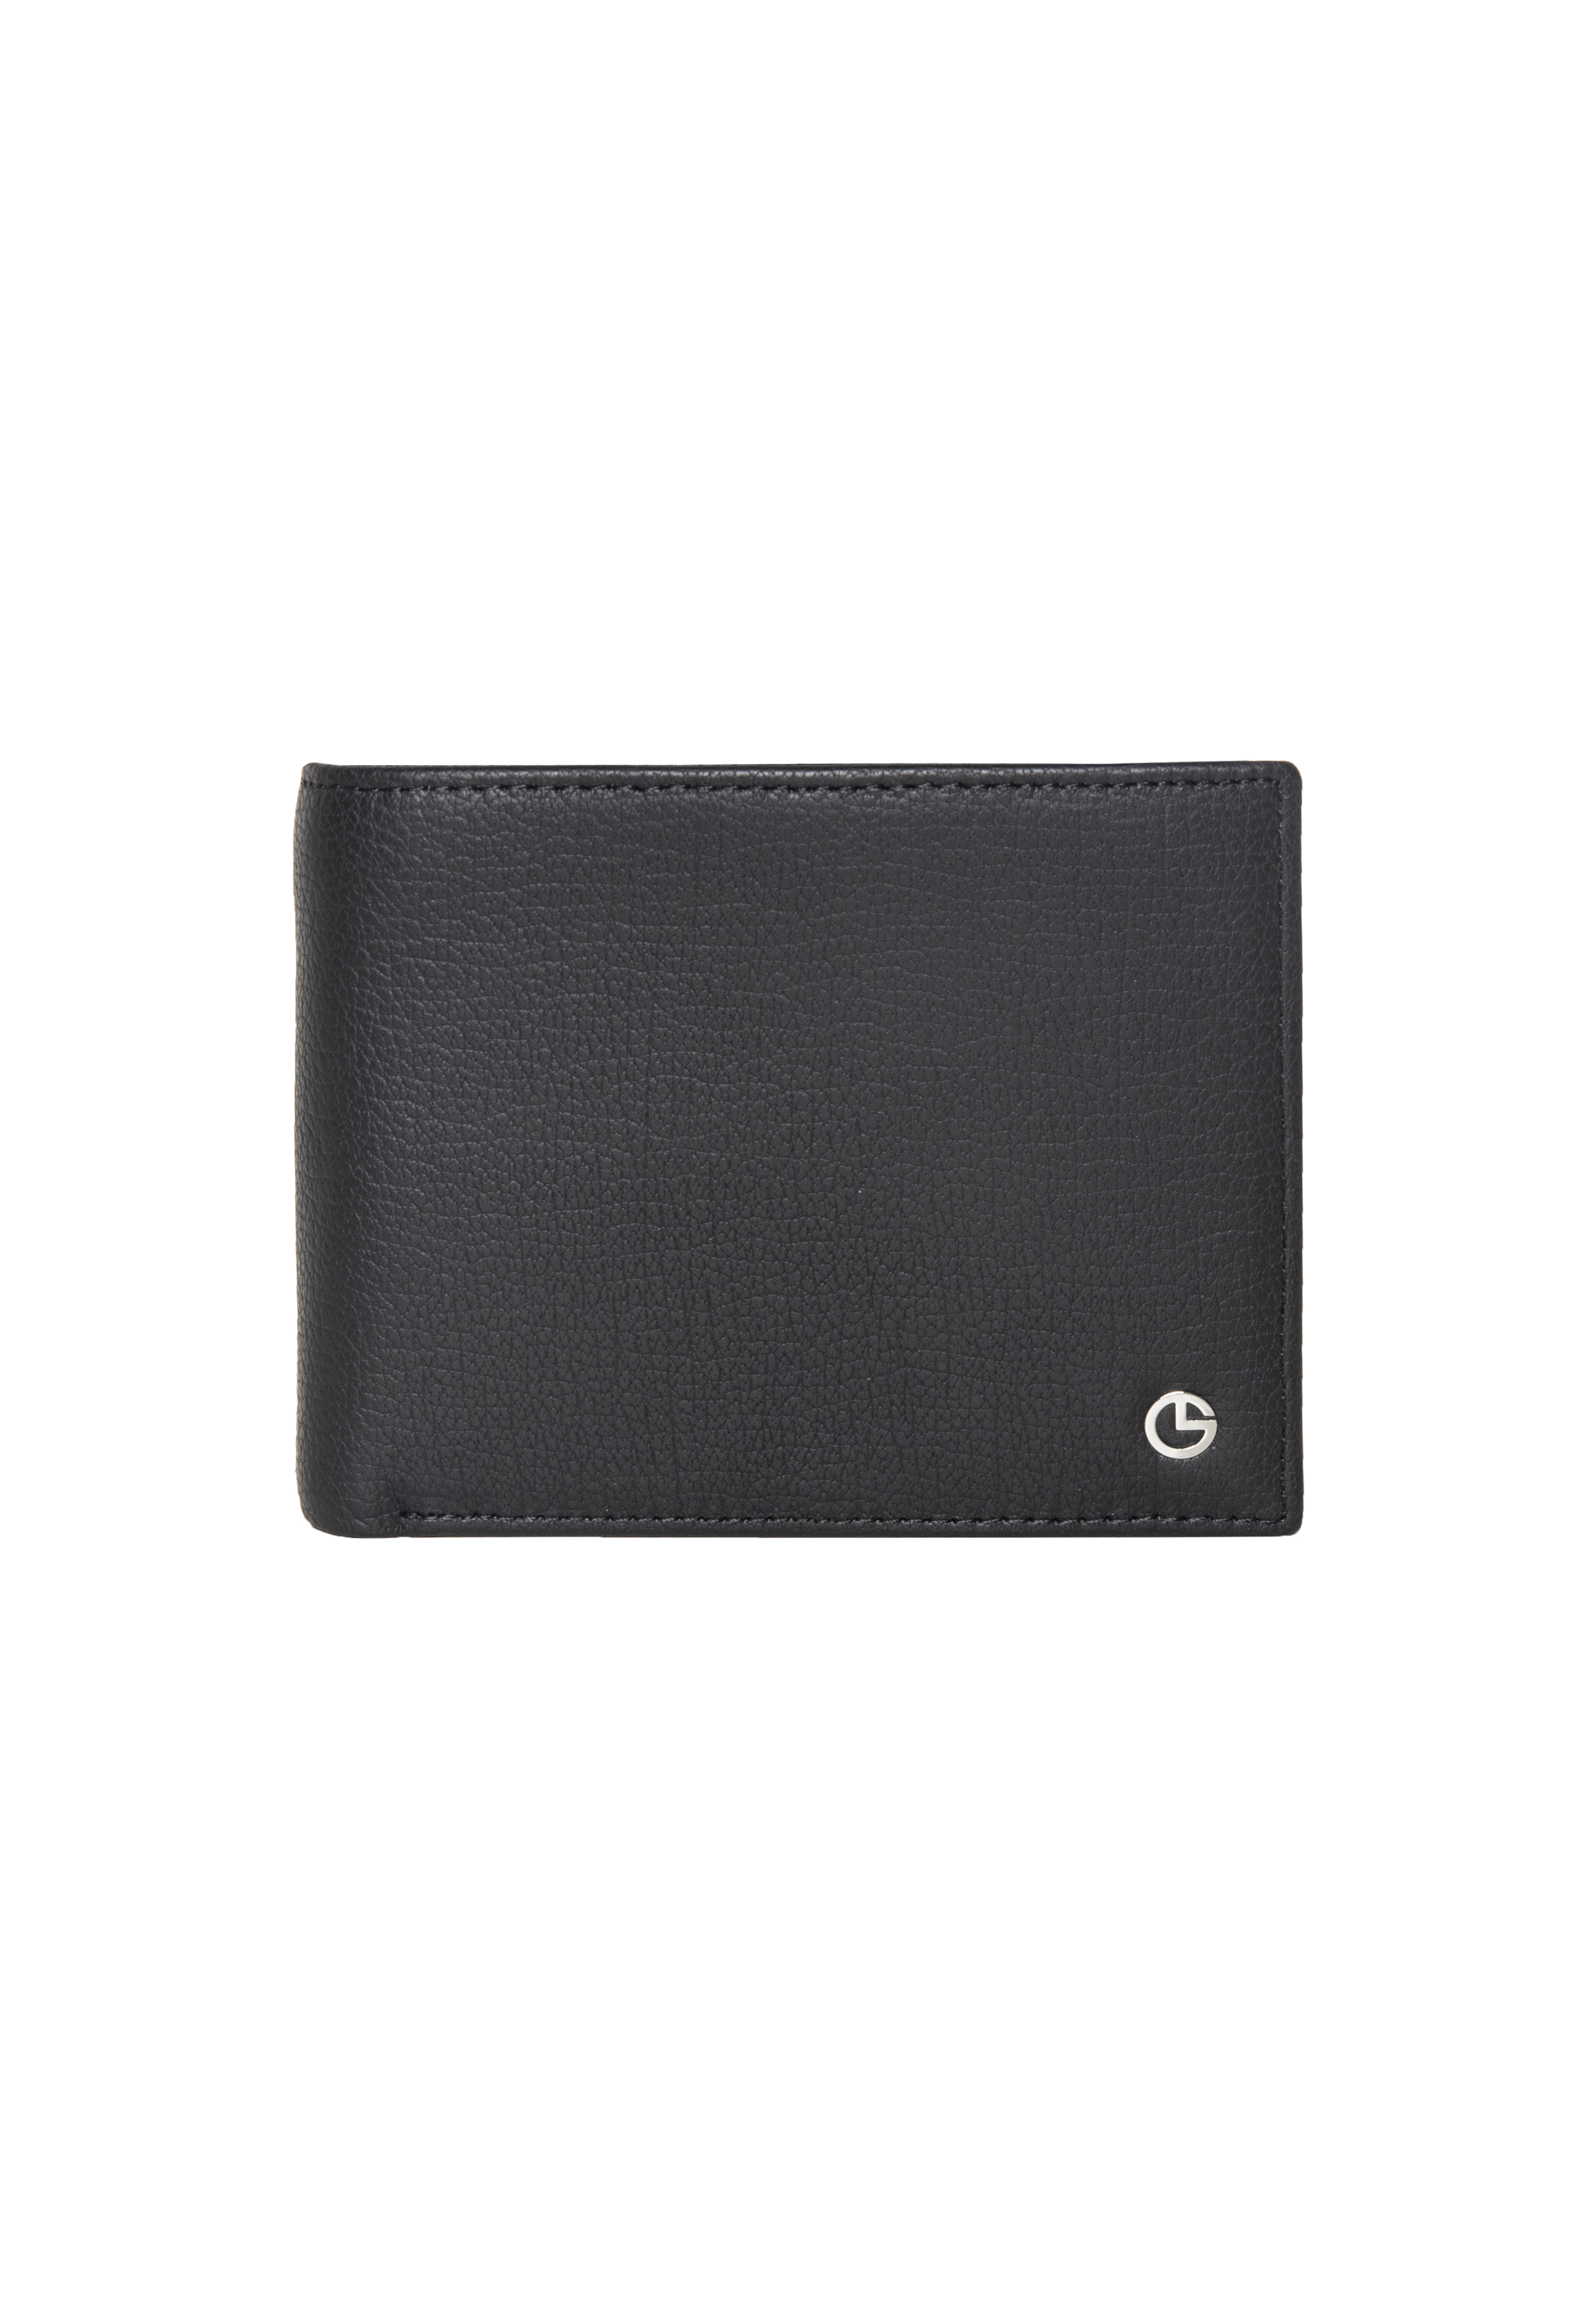 [Online Exclusive] Goldlion Men Genuine Leather Wallet (3 Cards Slot, Window Compartment, Coin Pouch) - Black